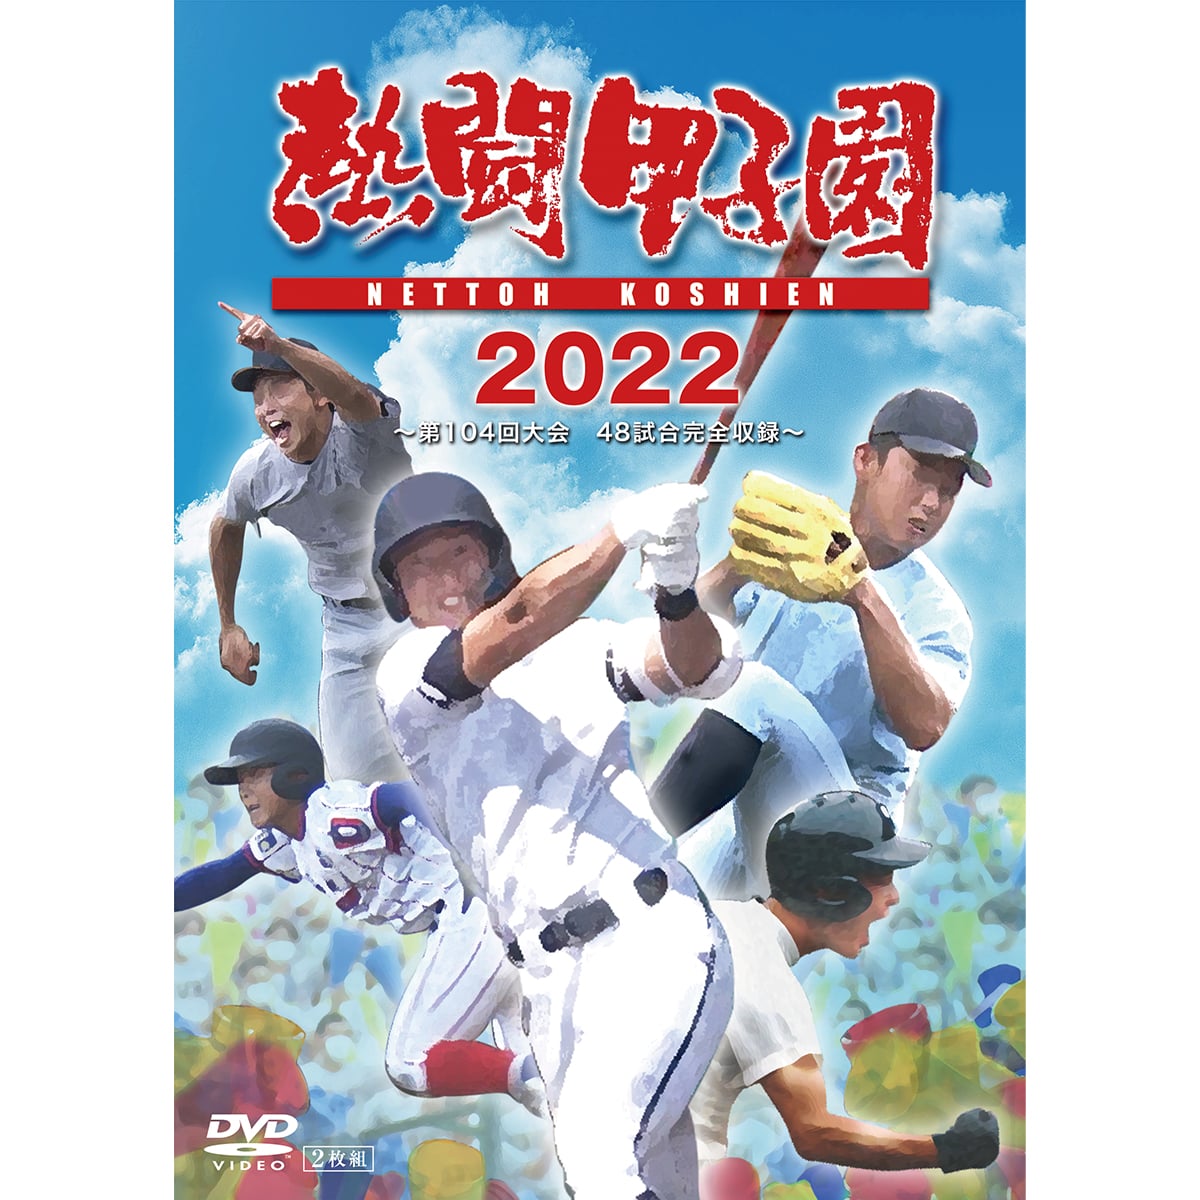 DVD「熱闘甲子園2022 」～第104回大会 48試合完全収録～